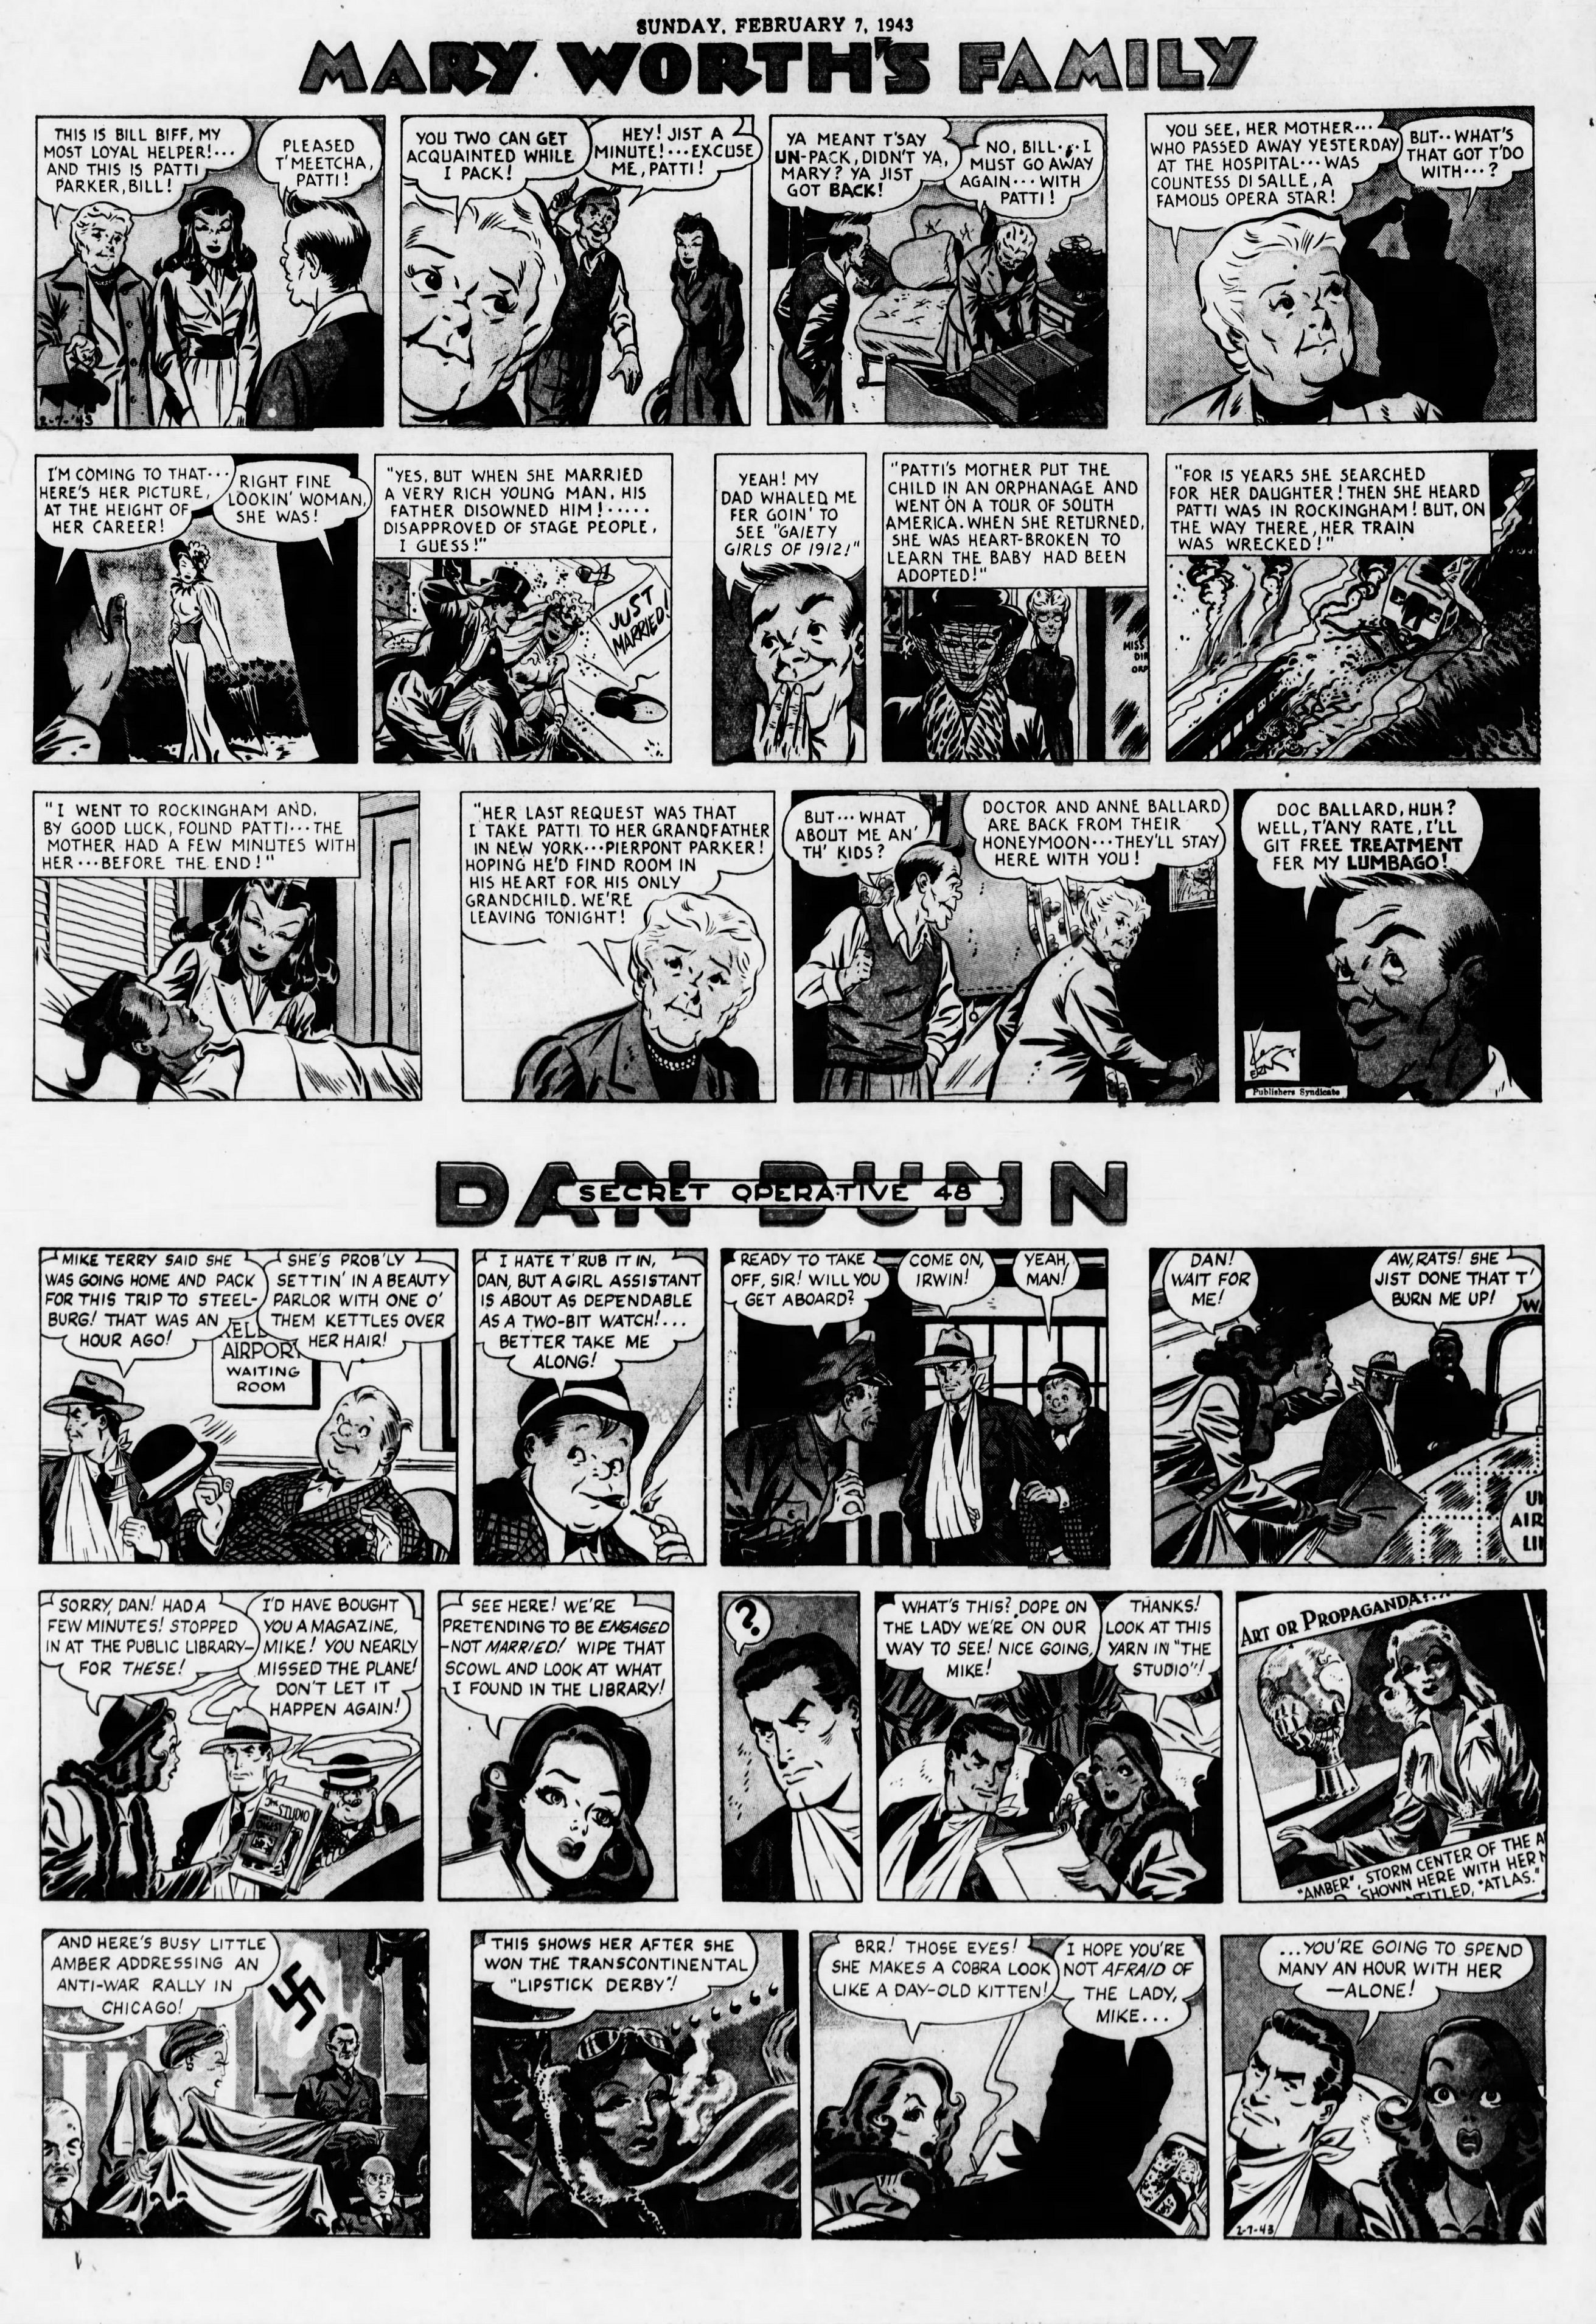 The_Brooklyn_Daily_Eagle_Sun__Feb_7__1943_(8).jpg